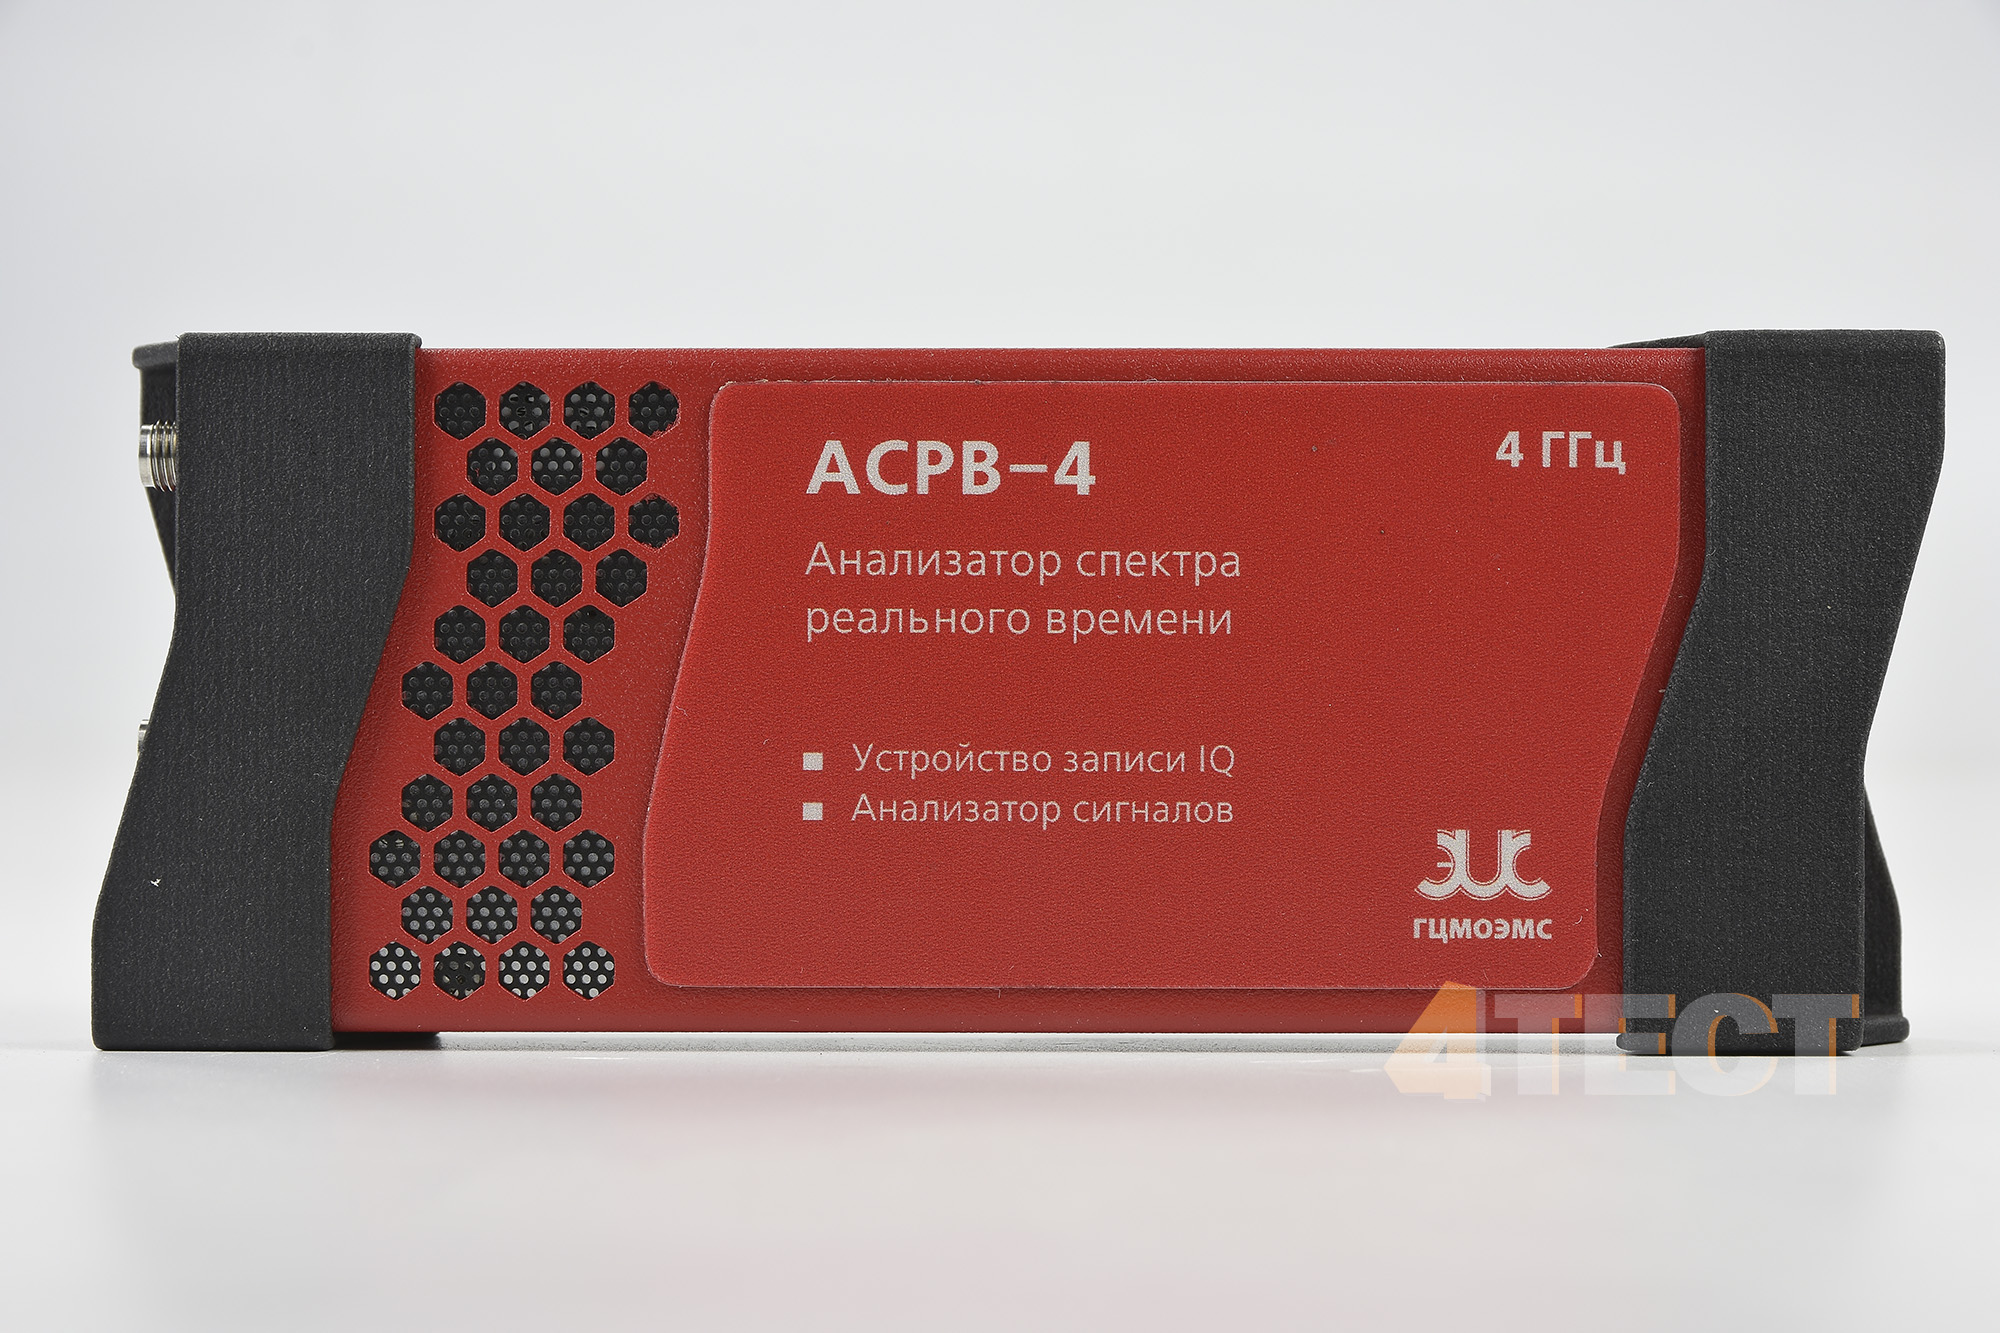 Анализатор спектра реального времени
ГЦМО ЭМС АСРВ-4
с диапазоном от 9 кГц до 4,5 ГГц/6,3 ГГц